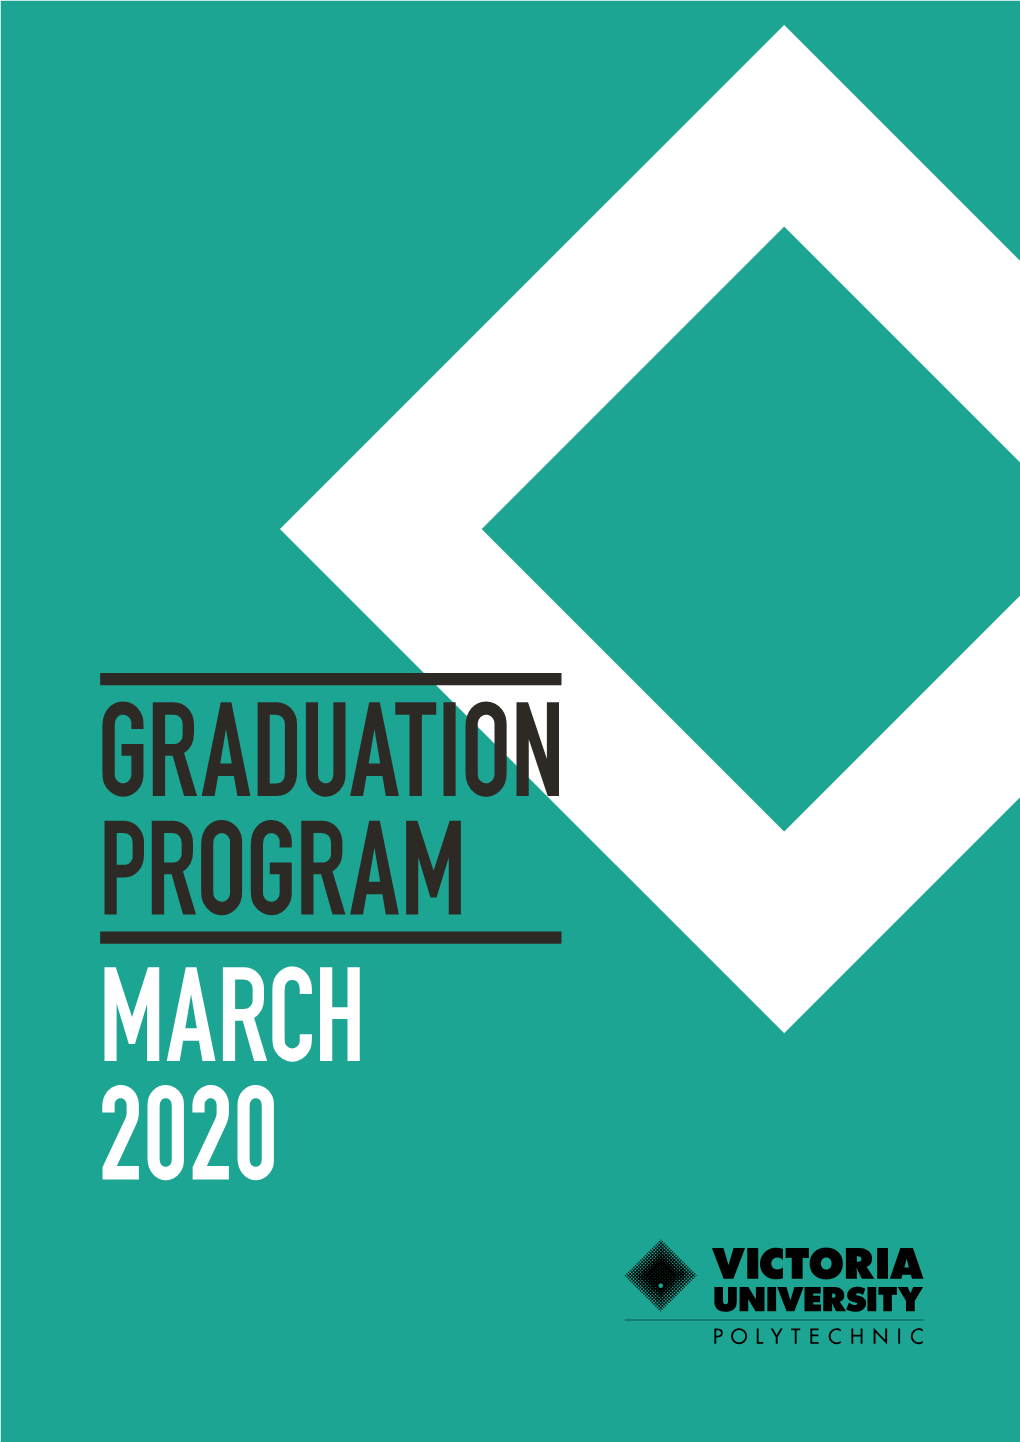 Graduation Program VU Polytechnic March 2020